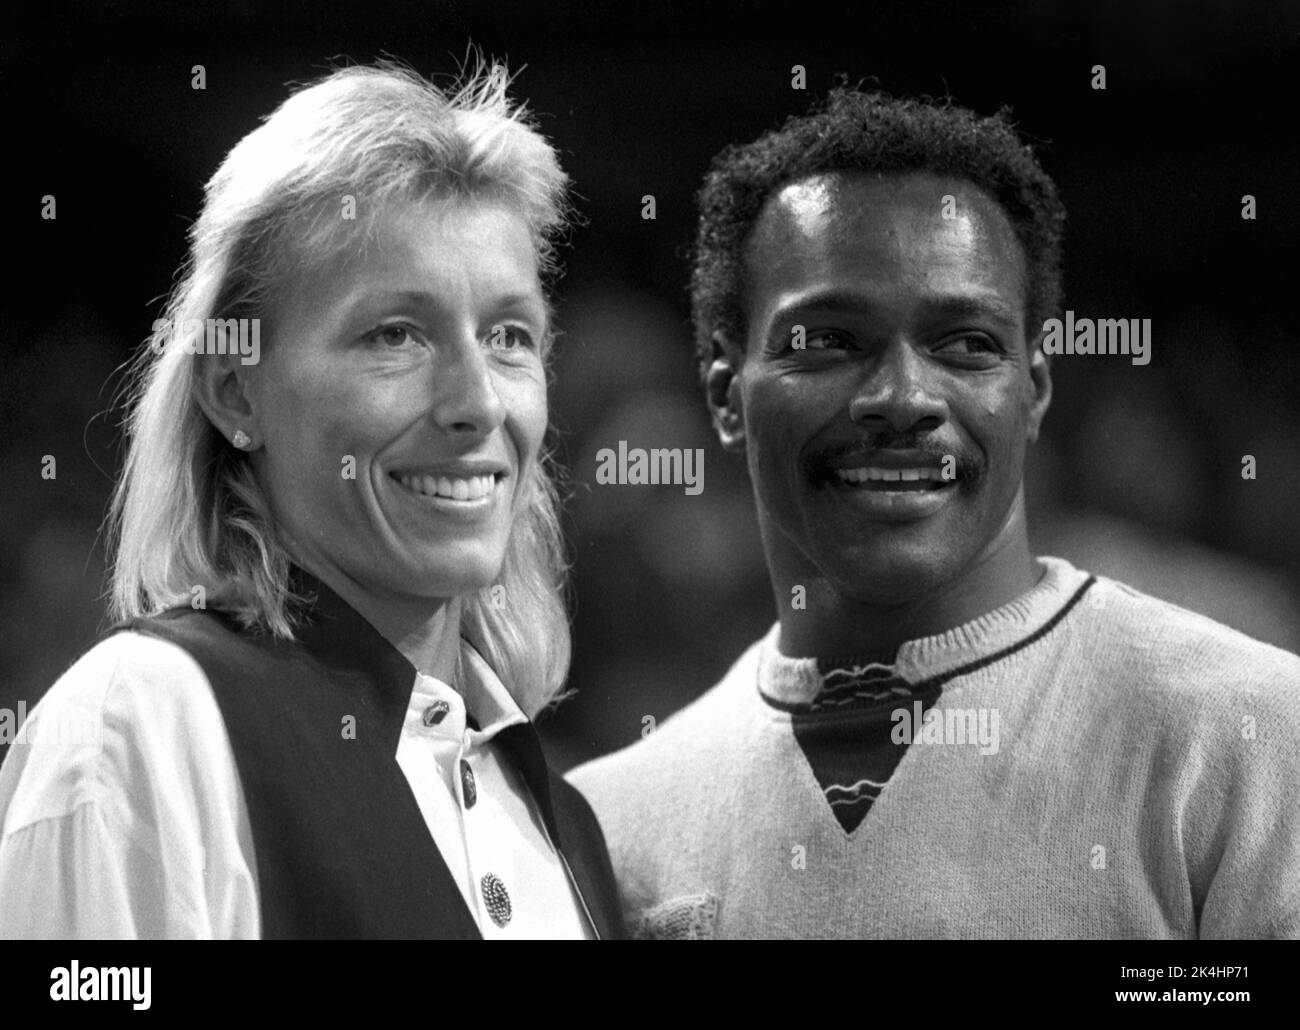 Tennis star Martina Navratilova and NFL Hall of Famer Walter Payton are shown together at a Chicago Bulls basketball game. ca. 1990. Stock Photo